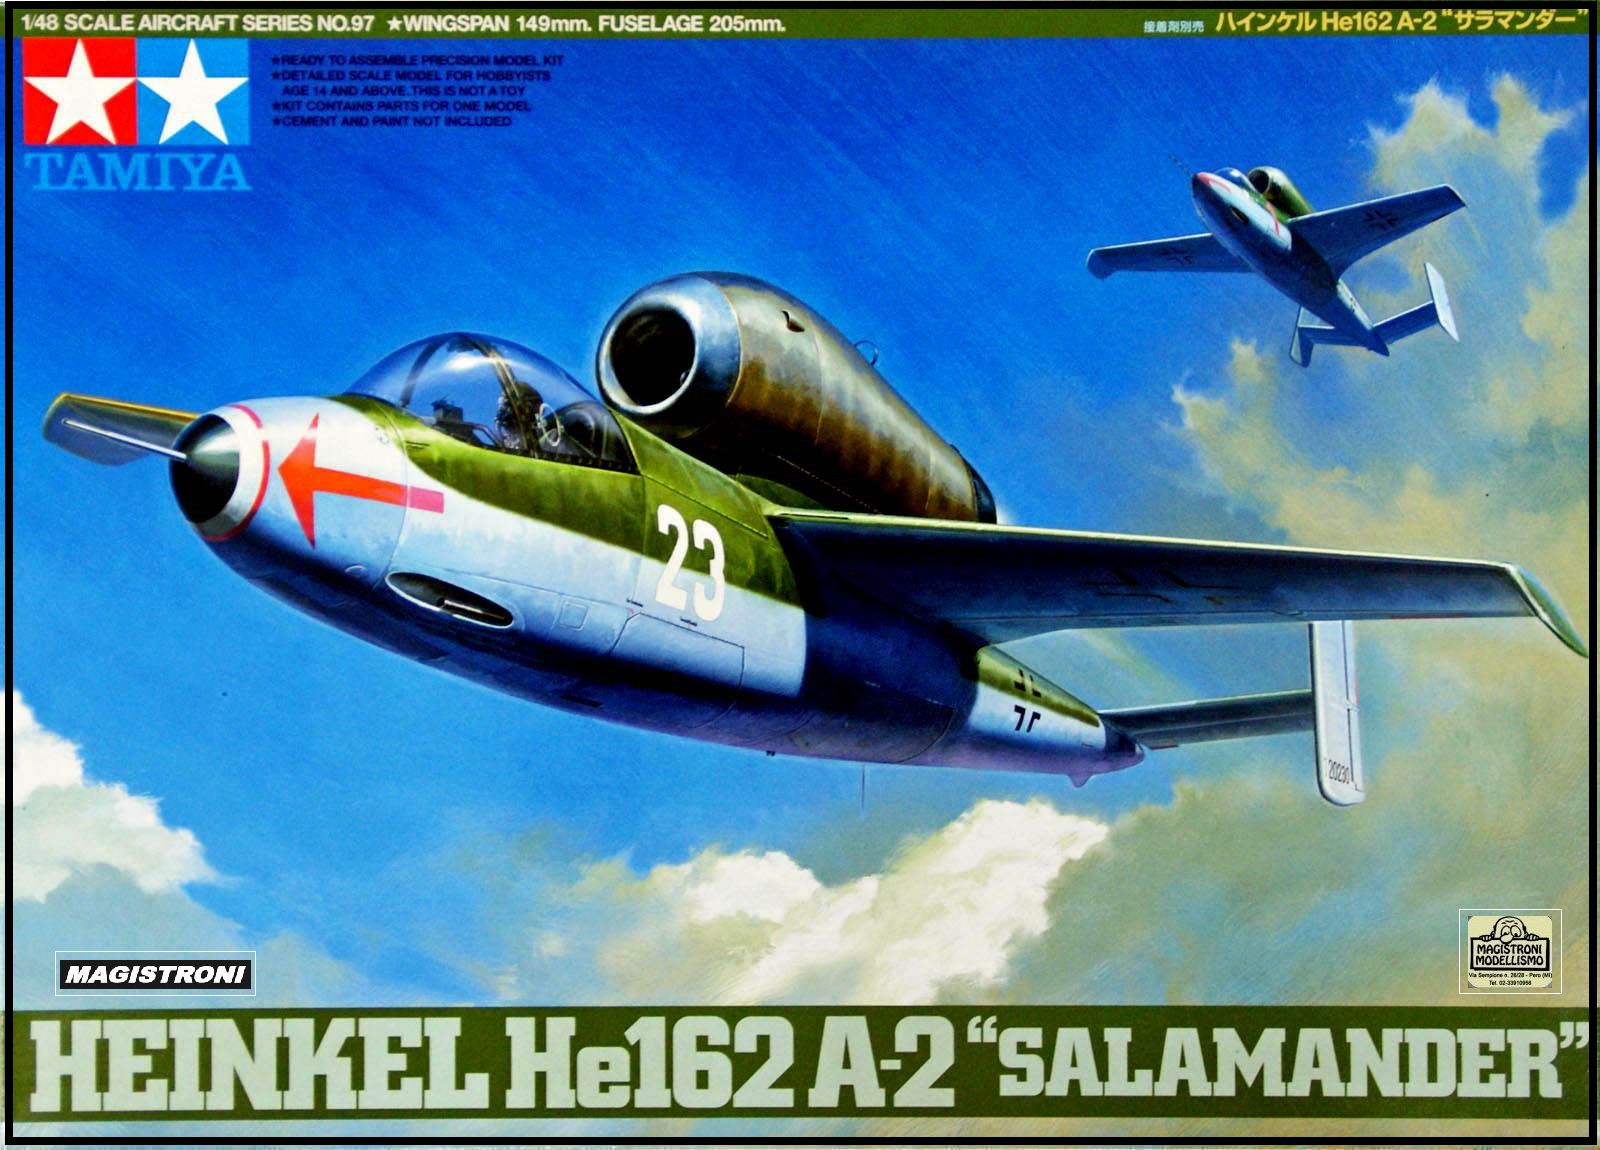 HEINKEL He162 A-2 "SALAMANDER"